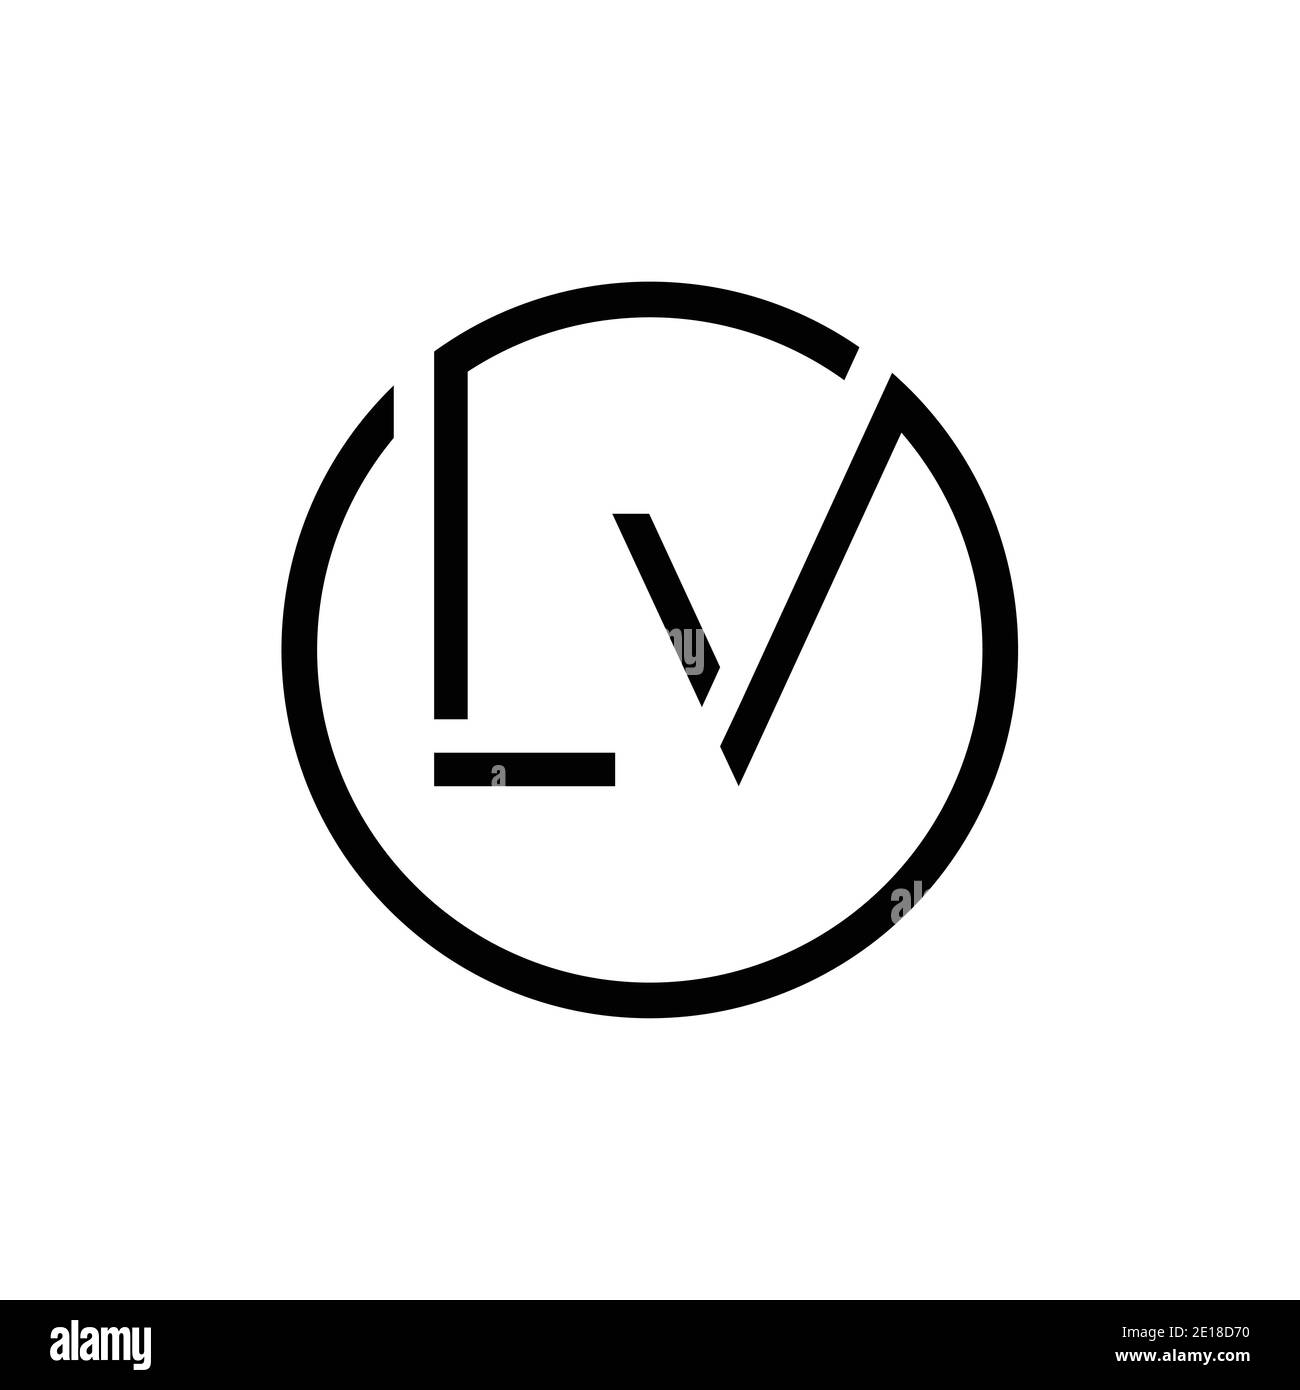 Vuitton logo Black and White Stock Photos & Images - Alamy